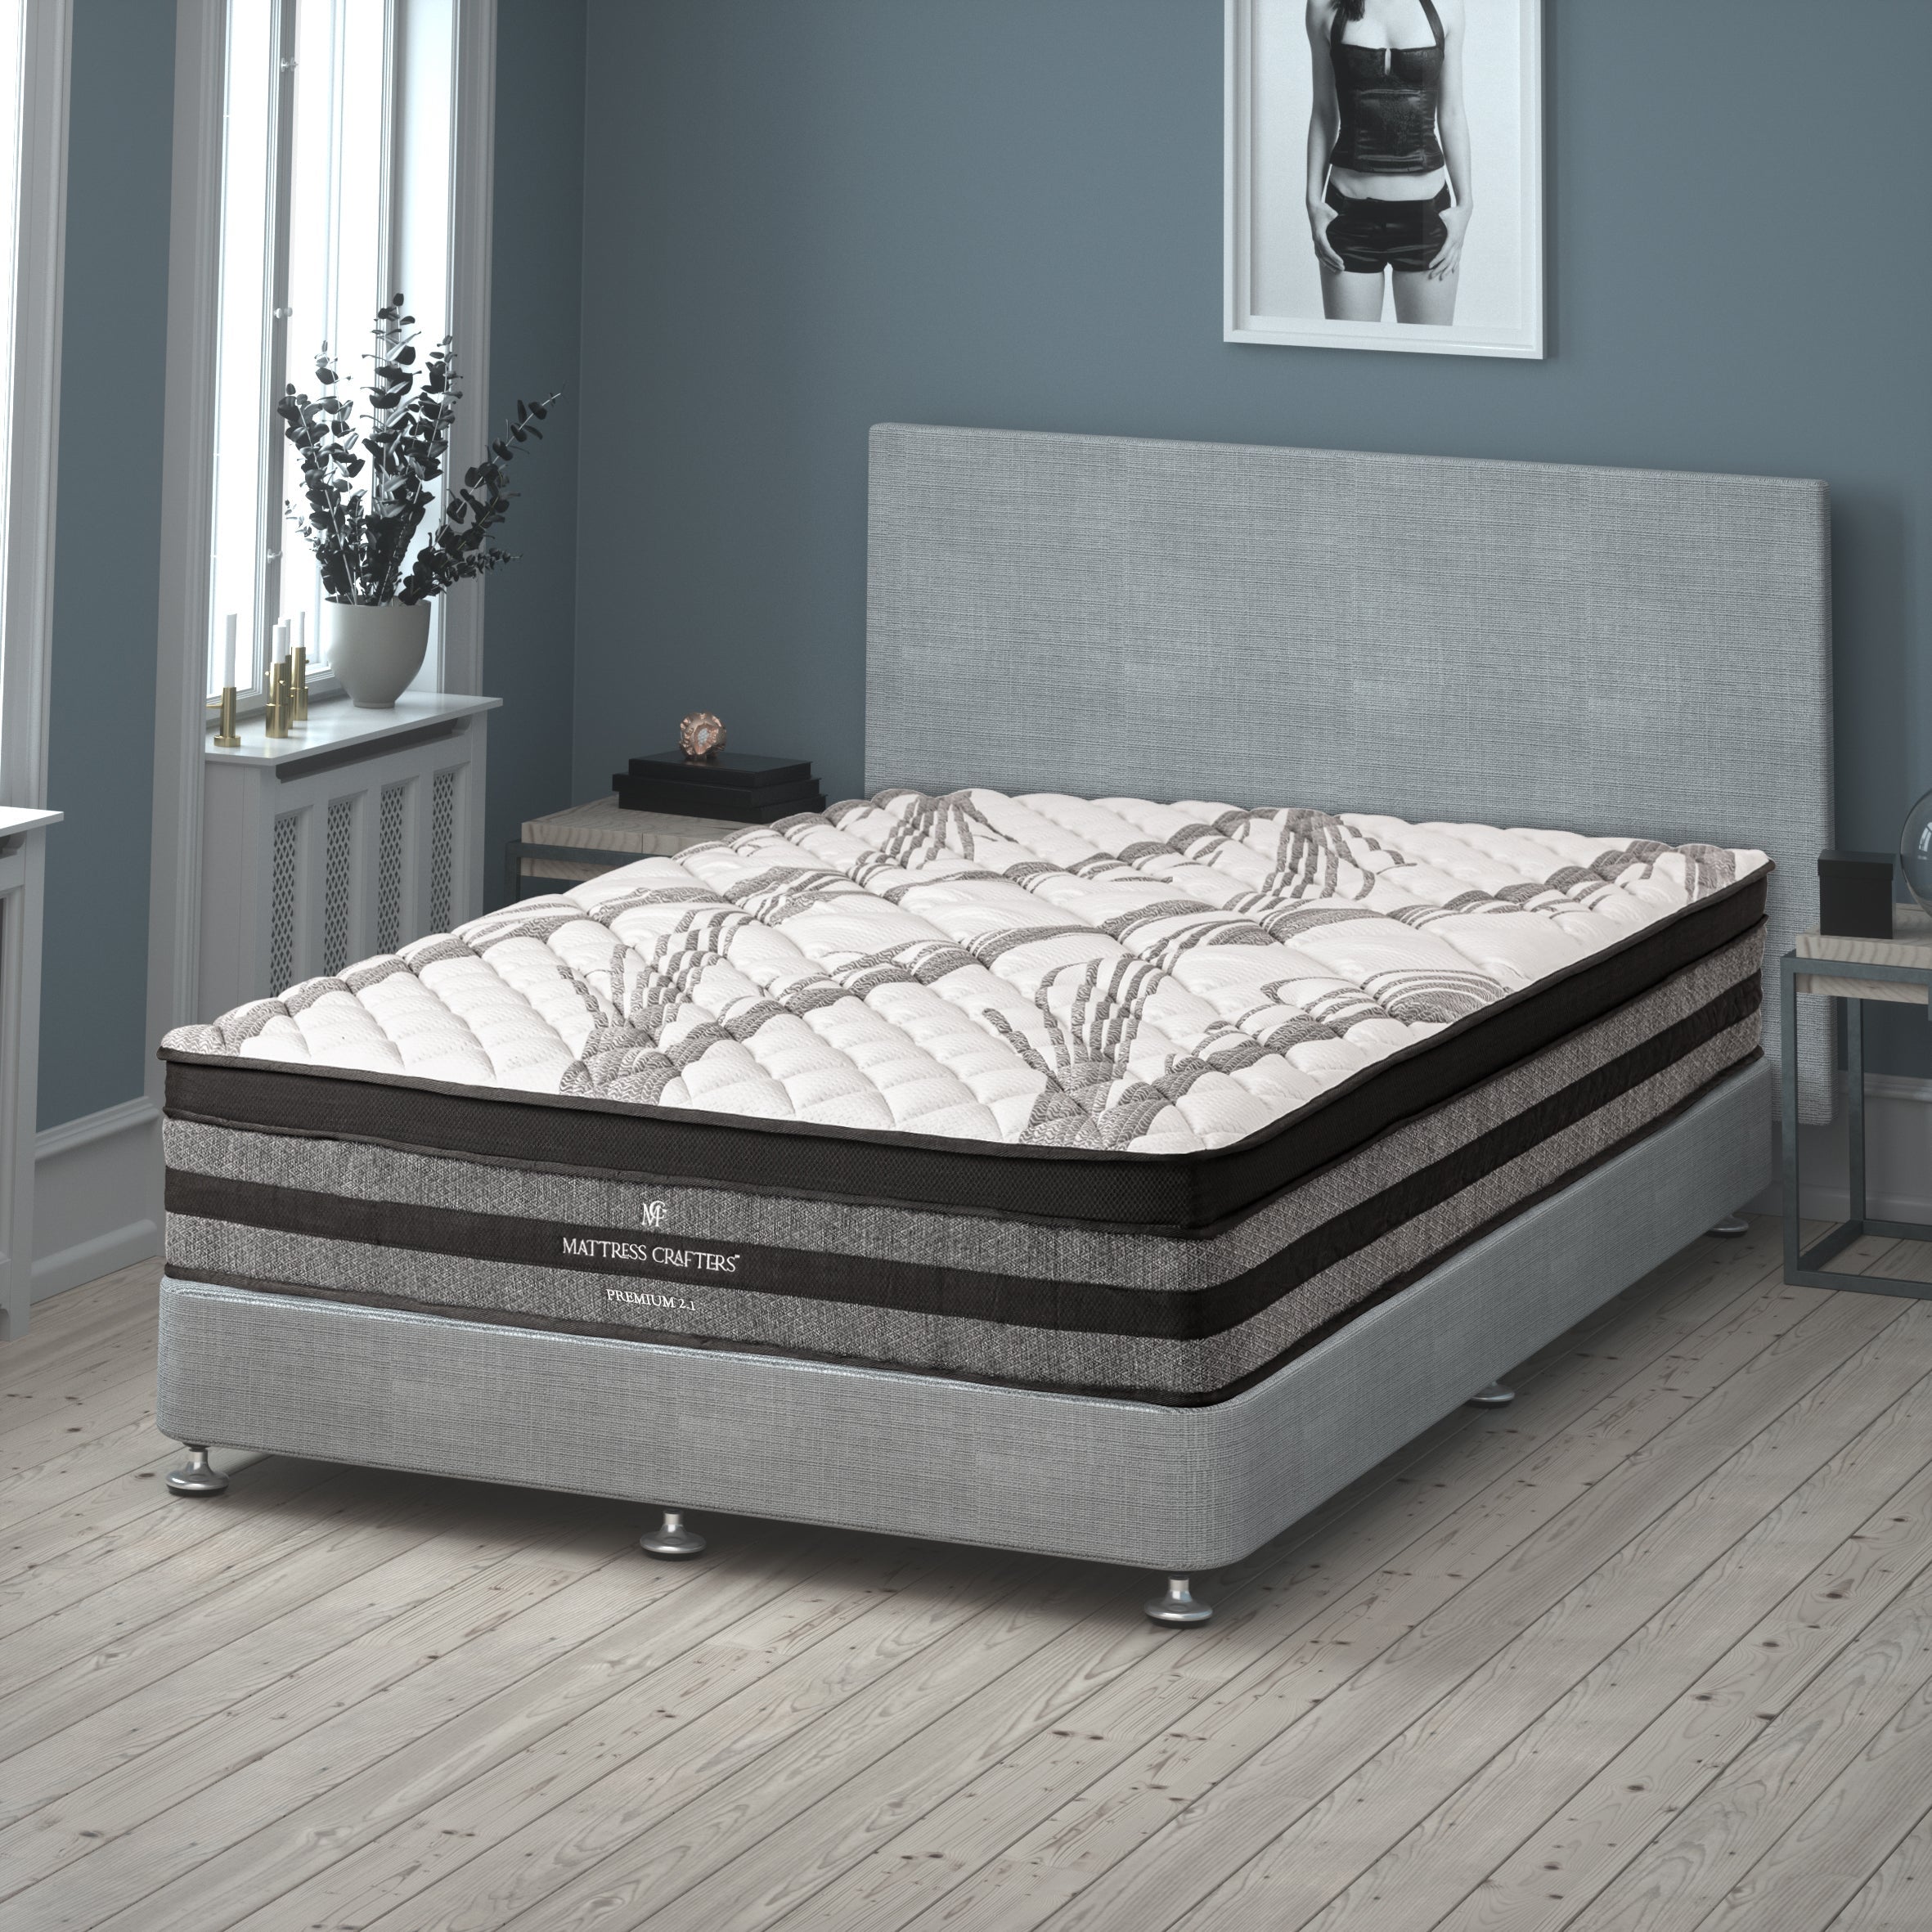 a mattress in a room